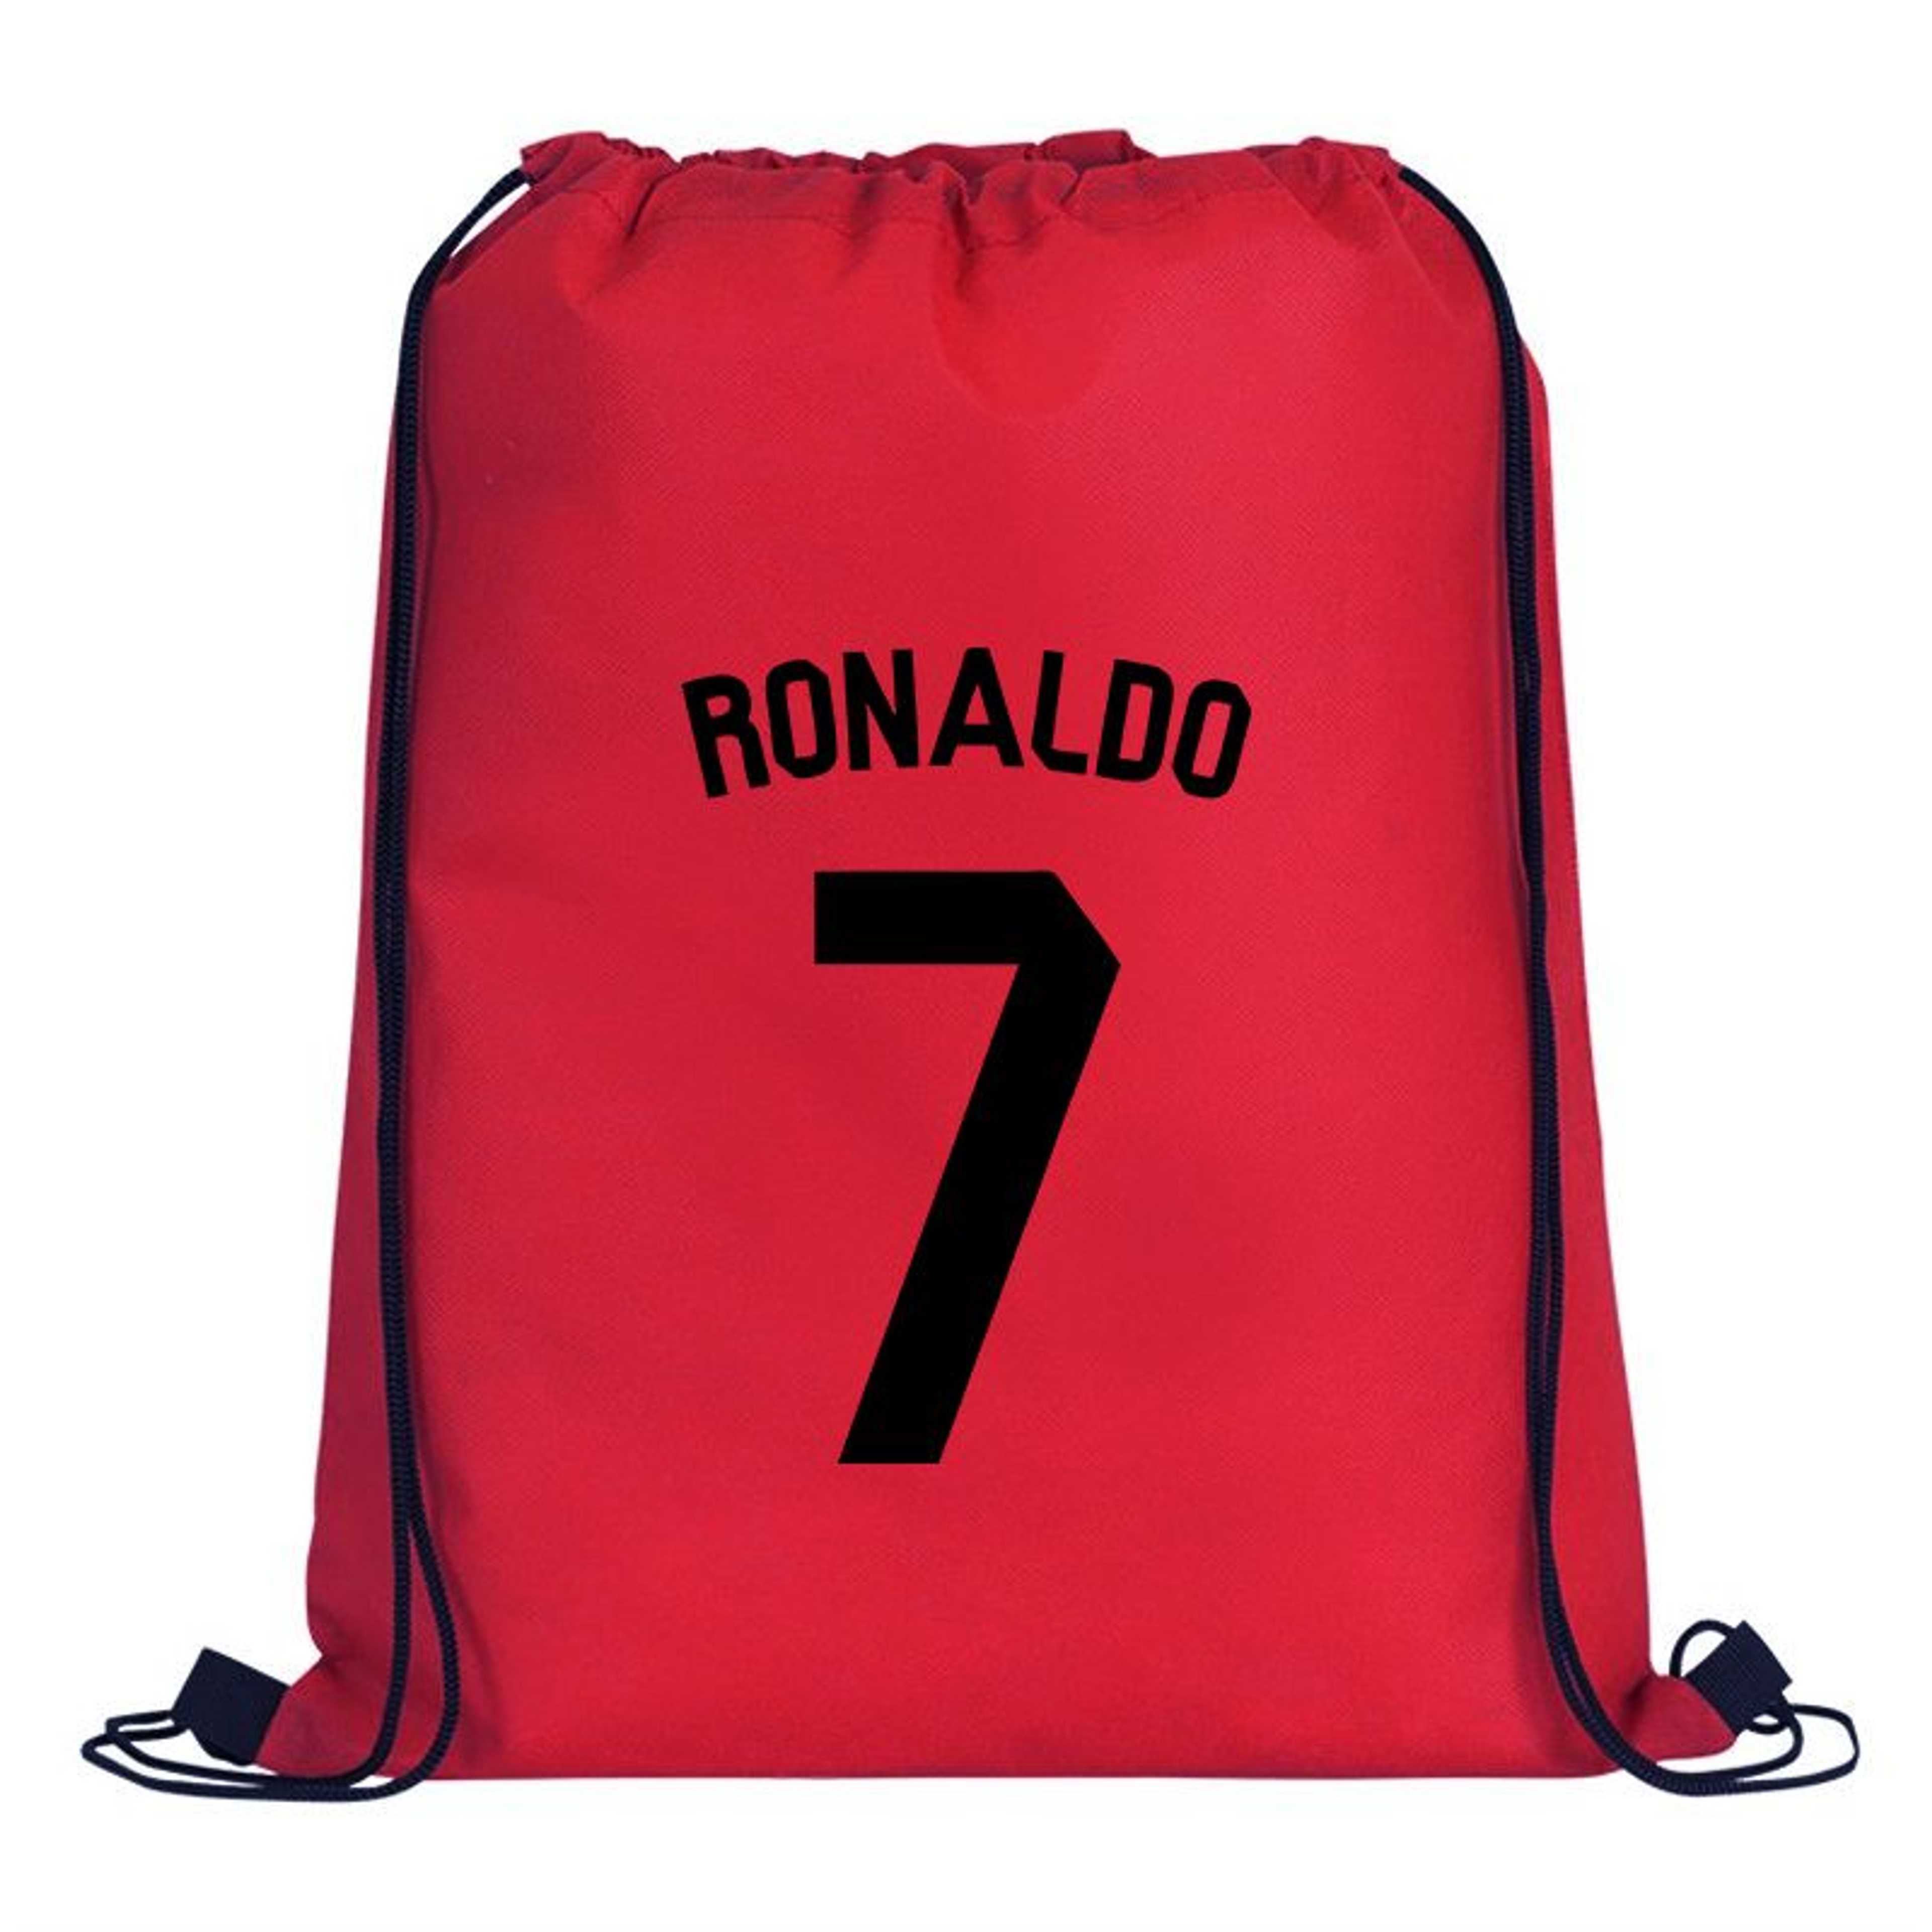 Red Ronaldo Drawstring Bag